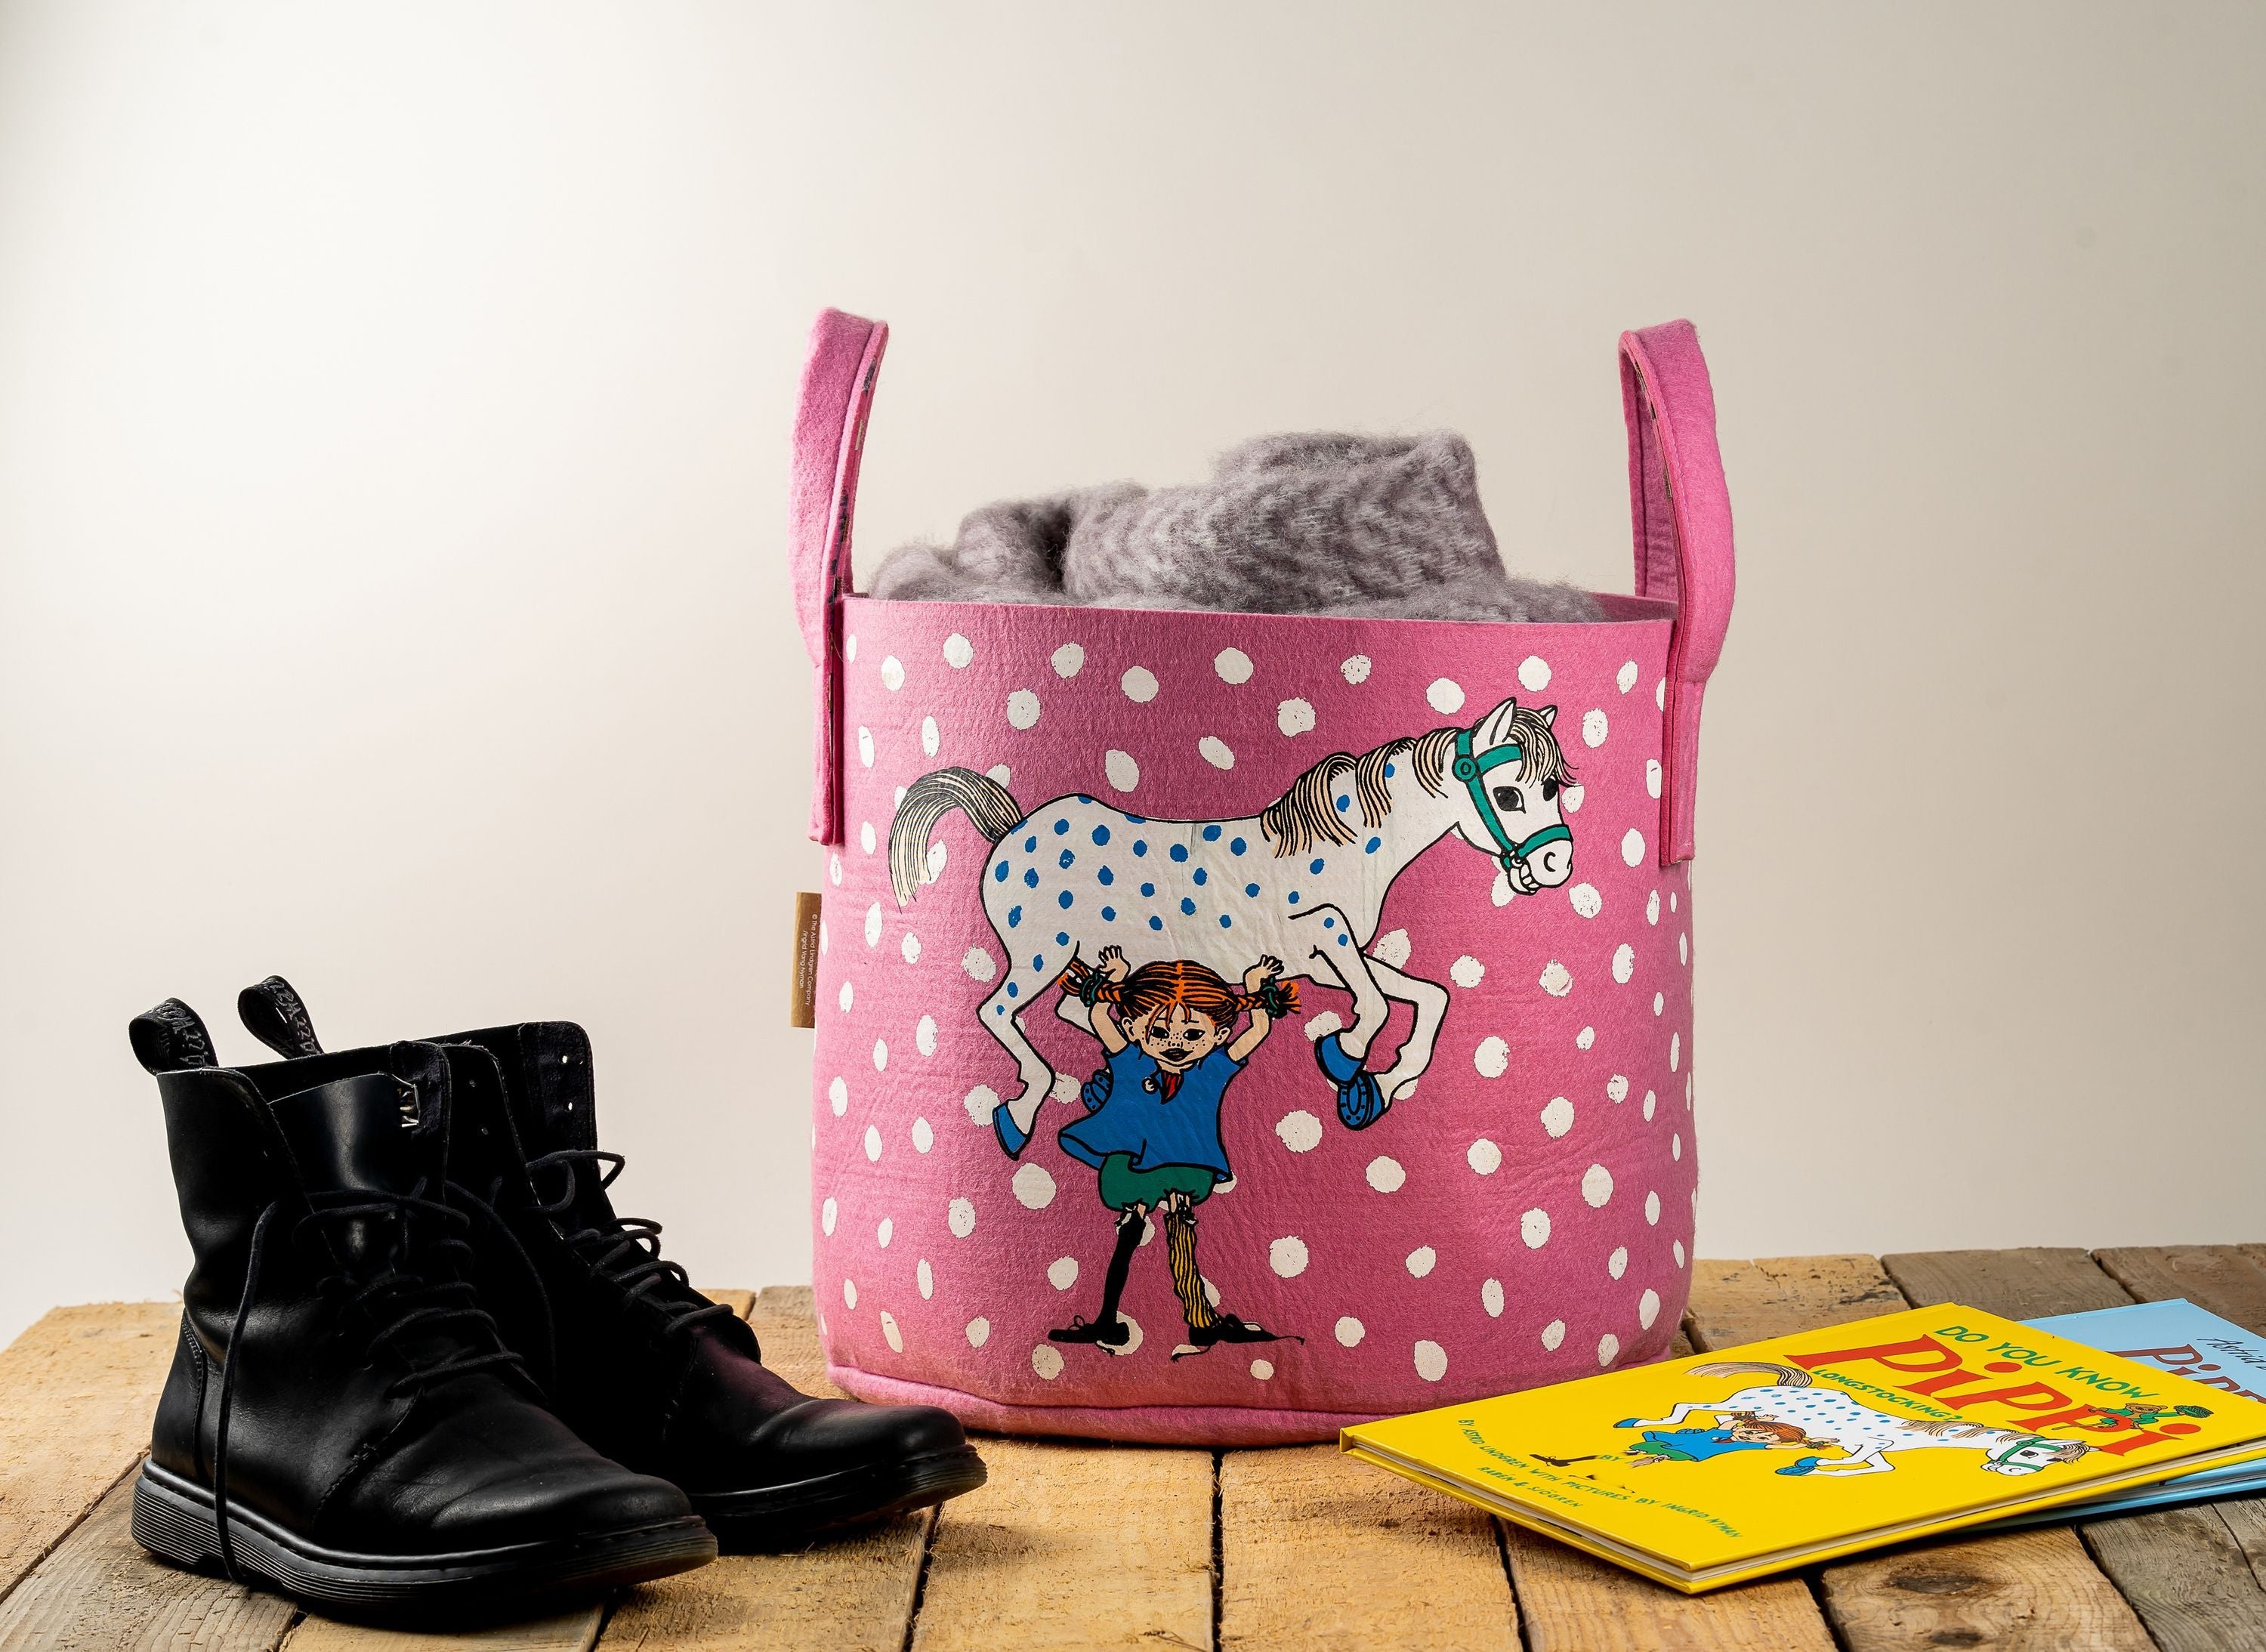 Muurla Pippi Longstocking Storage Basket, Pippi And The Horse, Pink